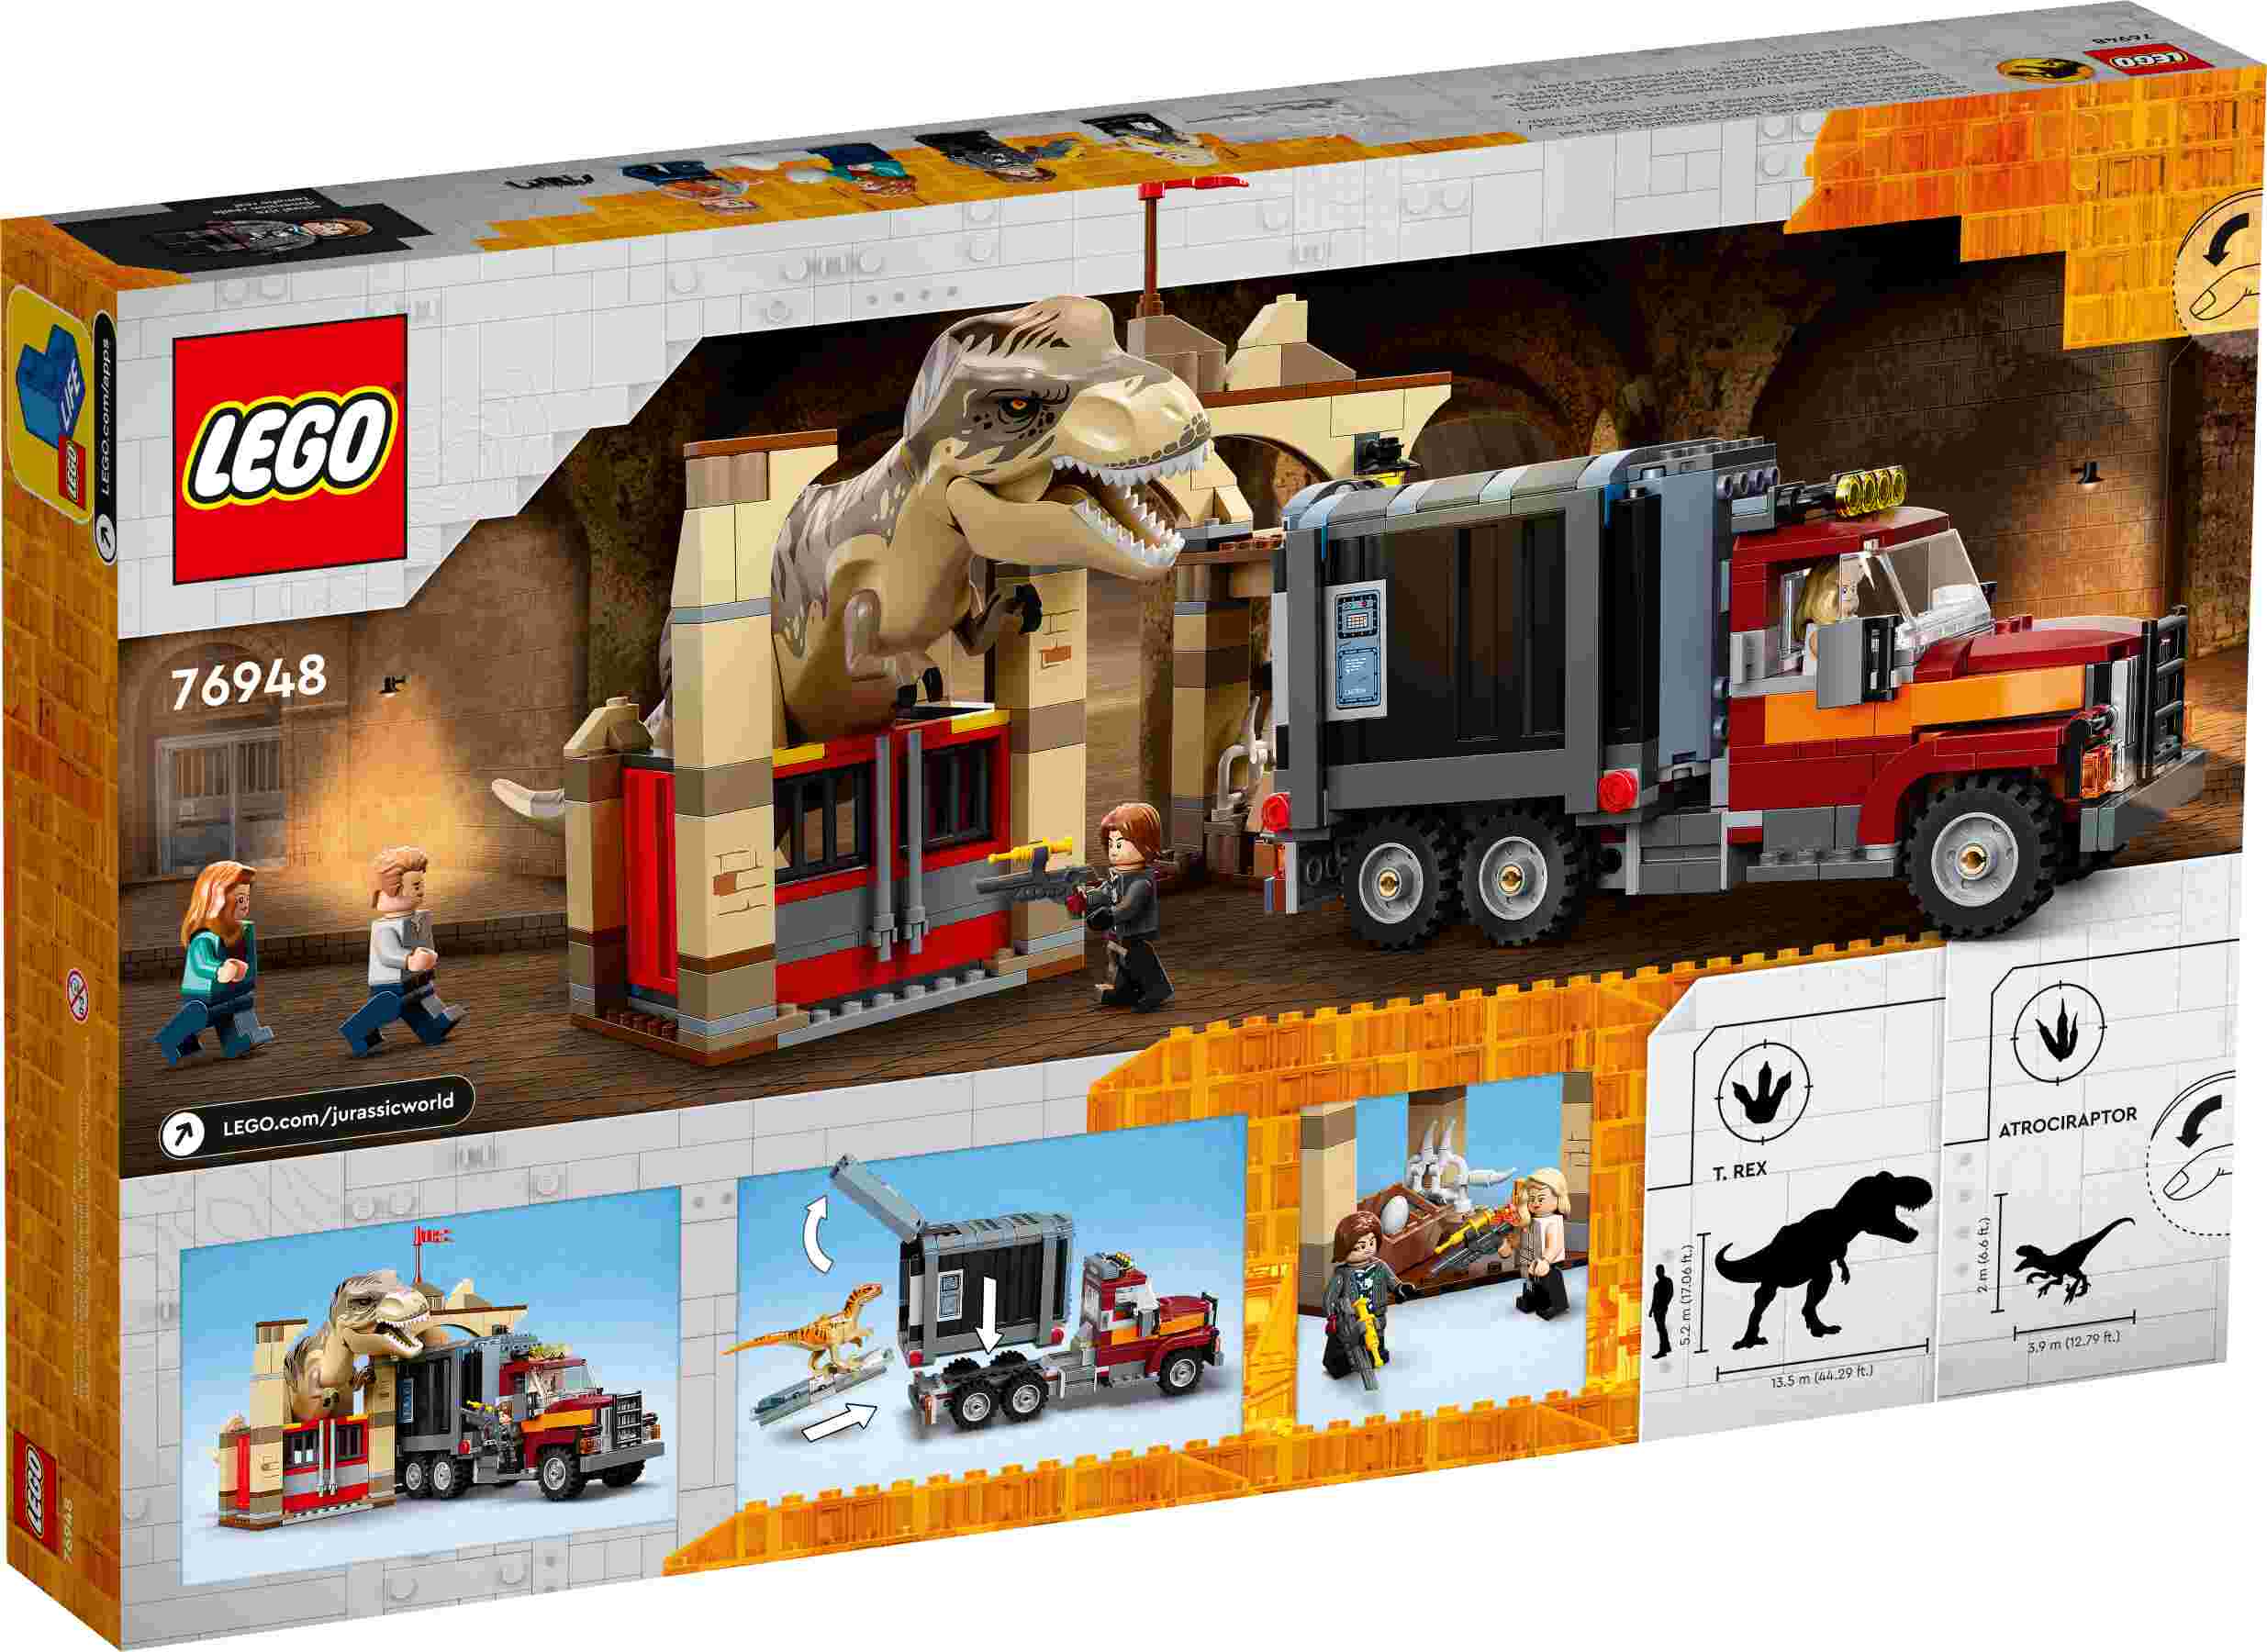 TBD- LEGO 76948 Jurassic World-4-2022T. Rex & Atrociraptor: Dinosaurier-Ausbruch